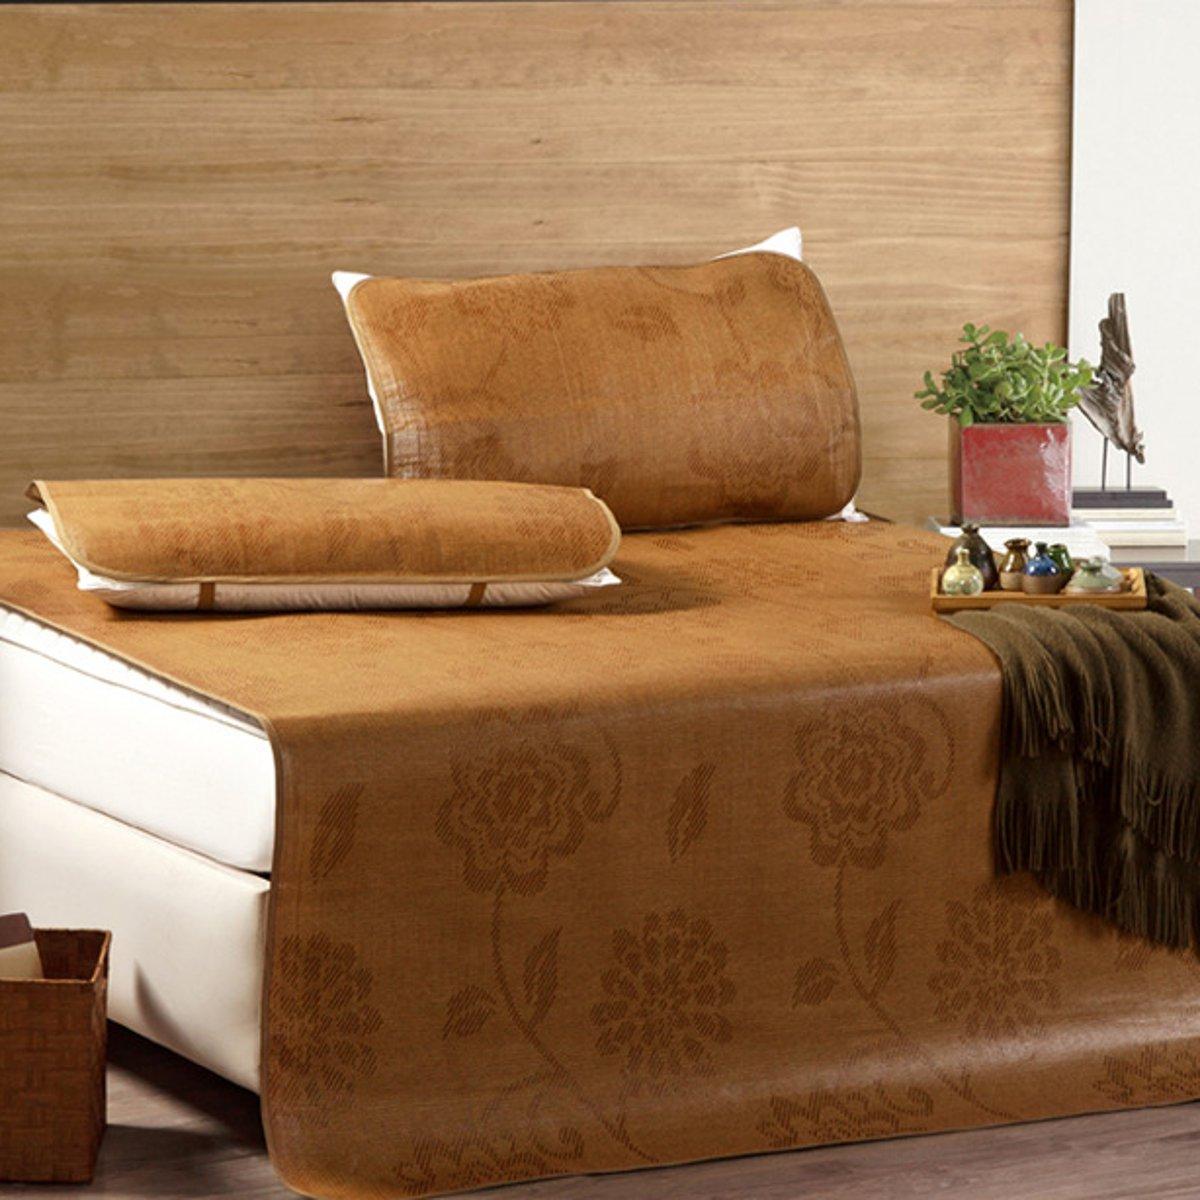 

3Pcs/1 Set Natural Bamboo Mat Матрасы Summer Sleeping Rattan Cooling Bed Cover